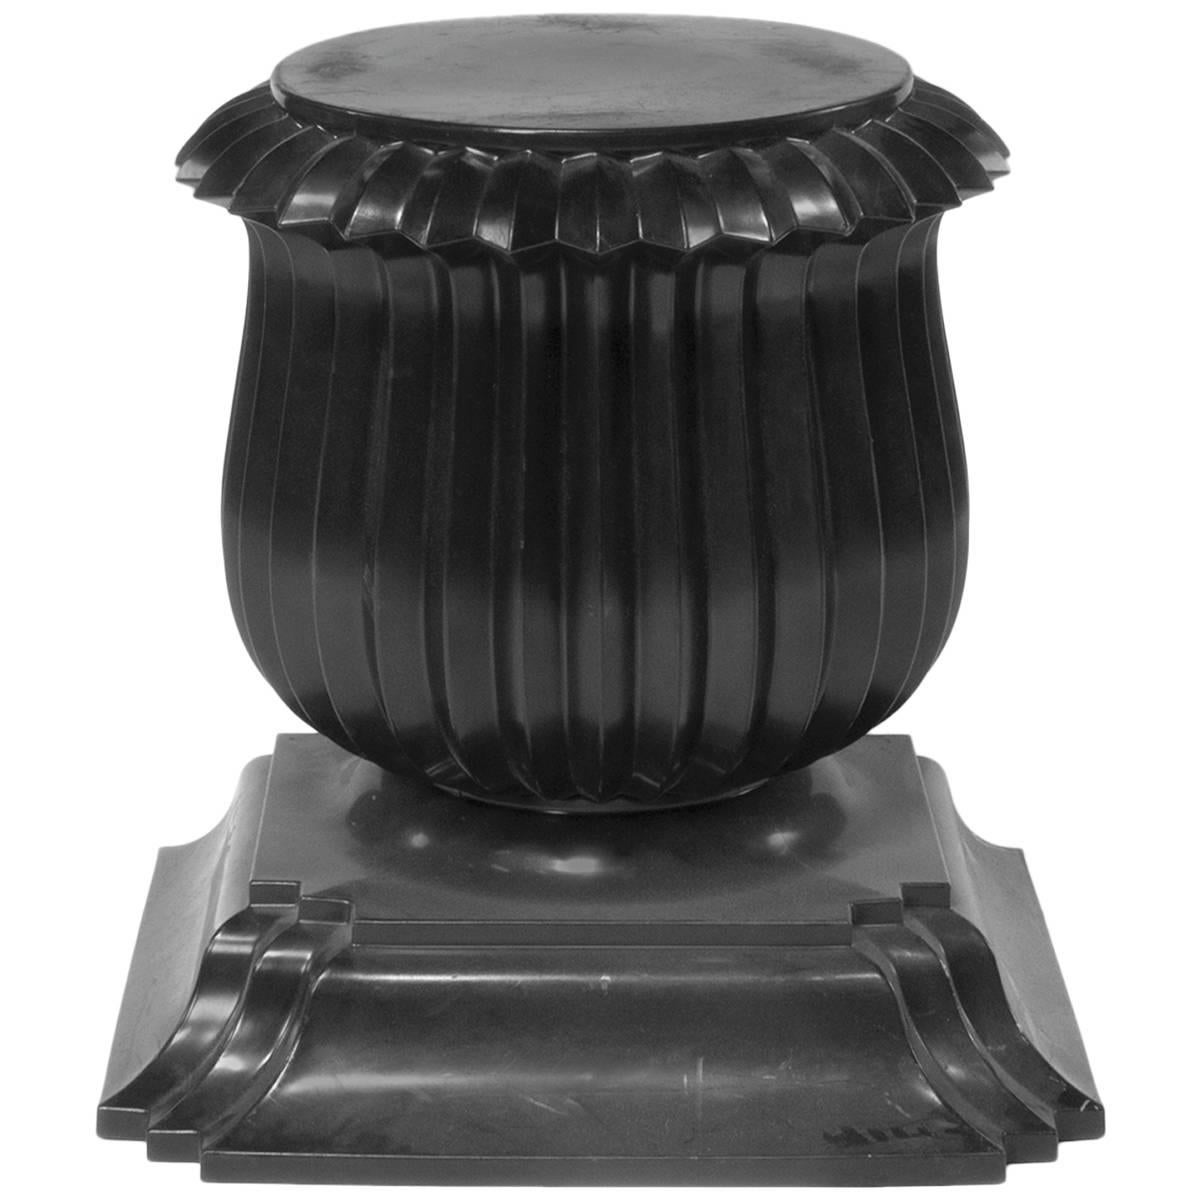 Black Moroso Capitello Pedestal End Table by Rajiv Saini, Italy For Sale